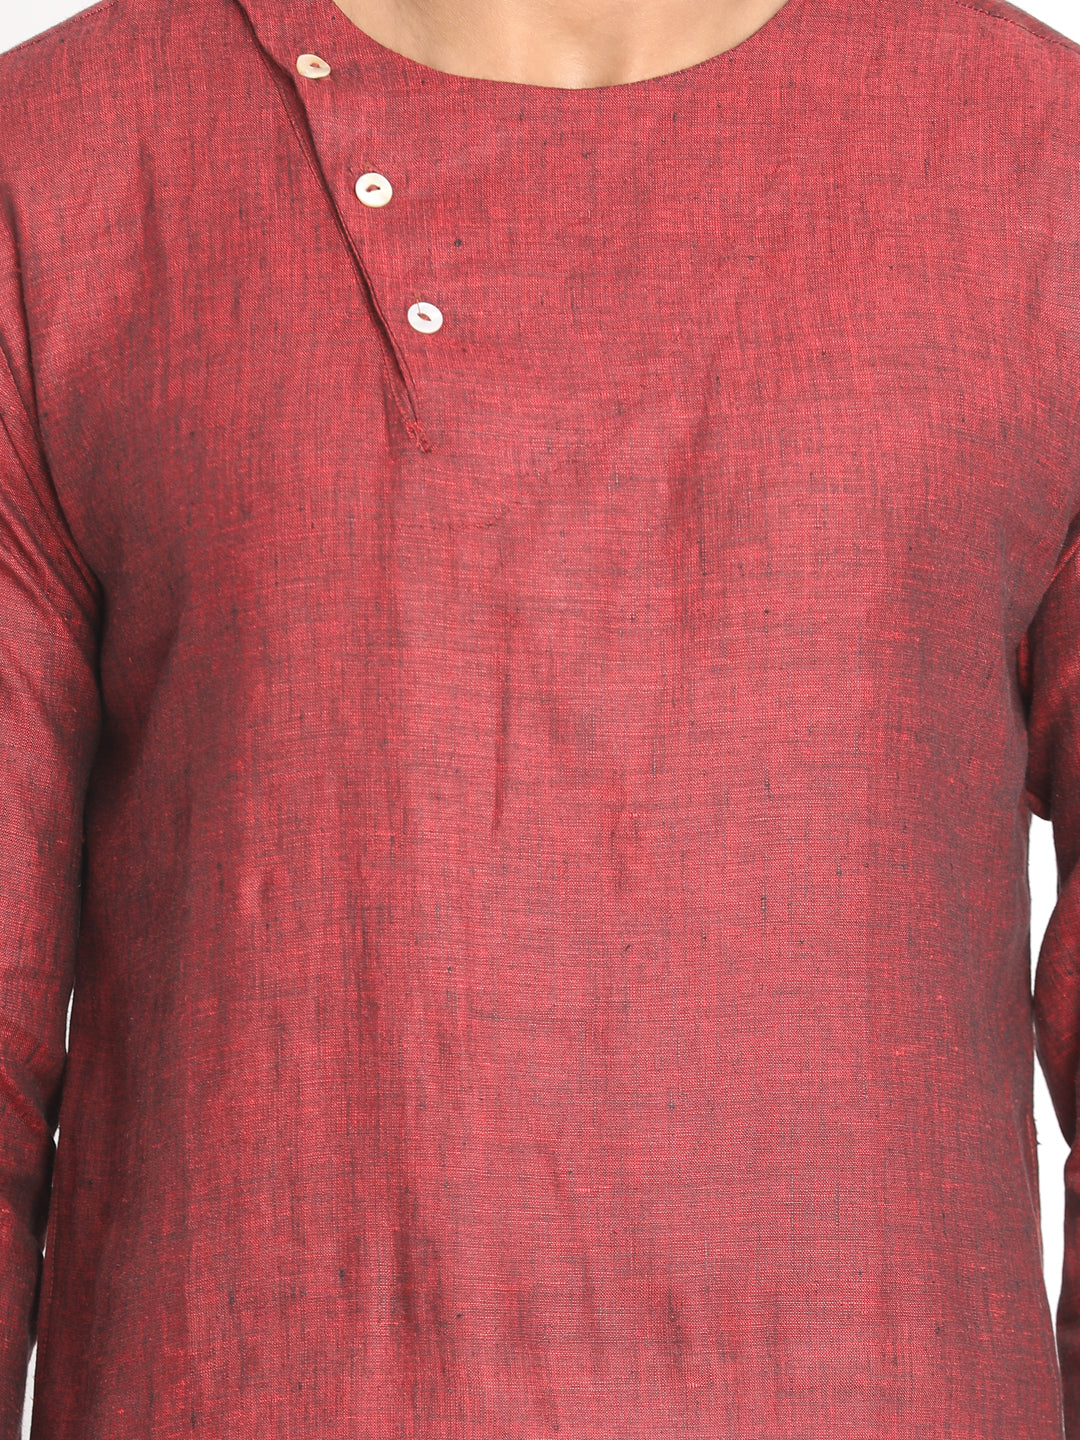 Nakshi Maroon Solid Cotton Linen Long Kurta